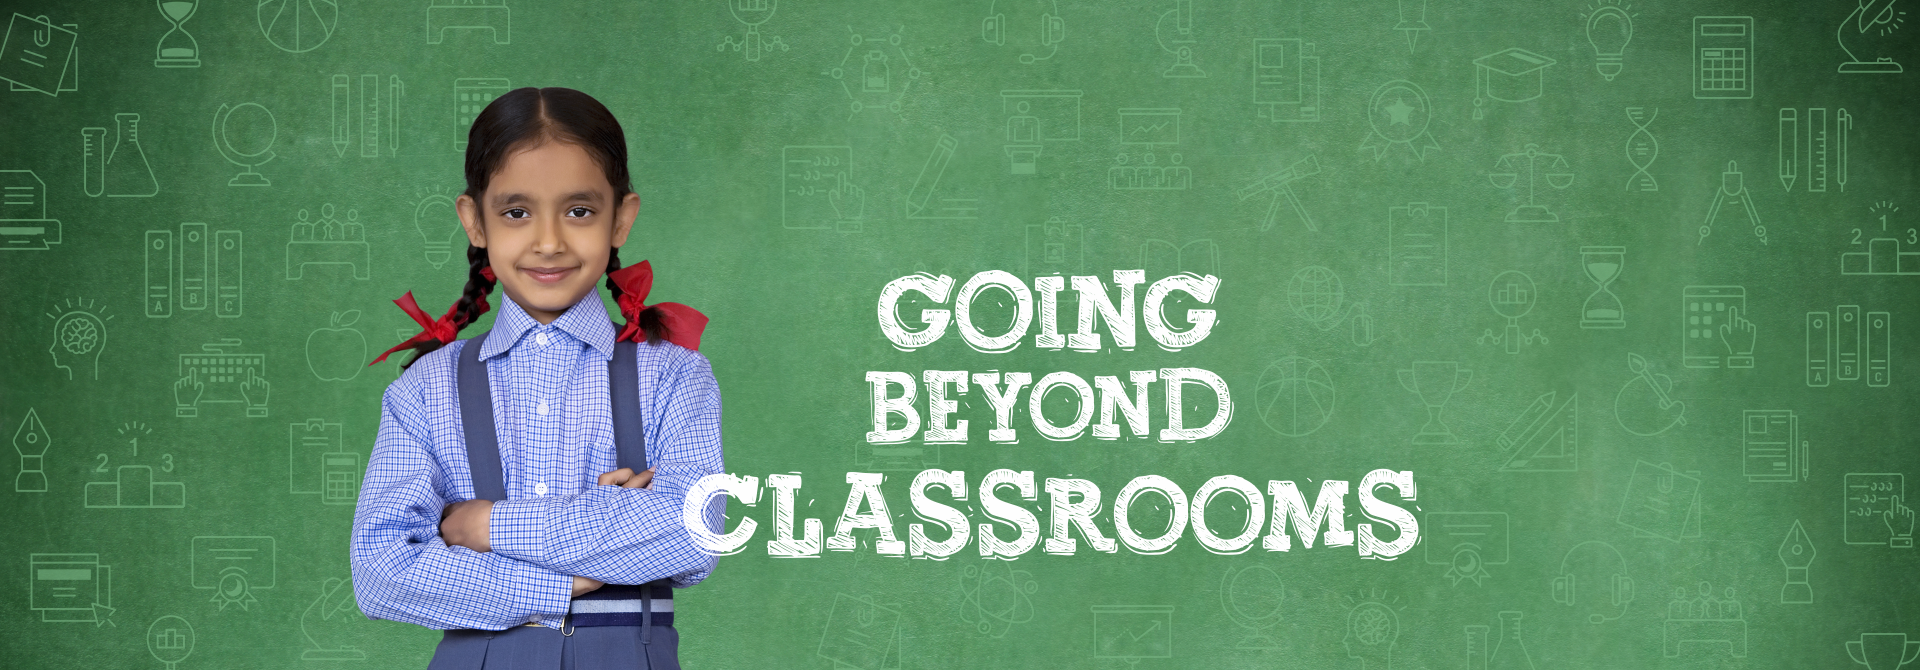 Going Beyond Classrooms